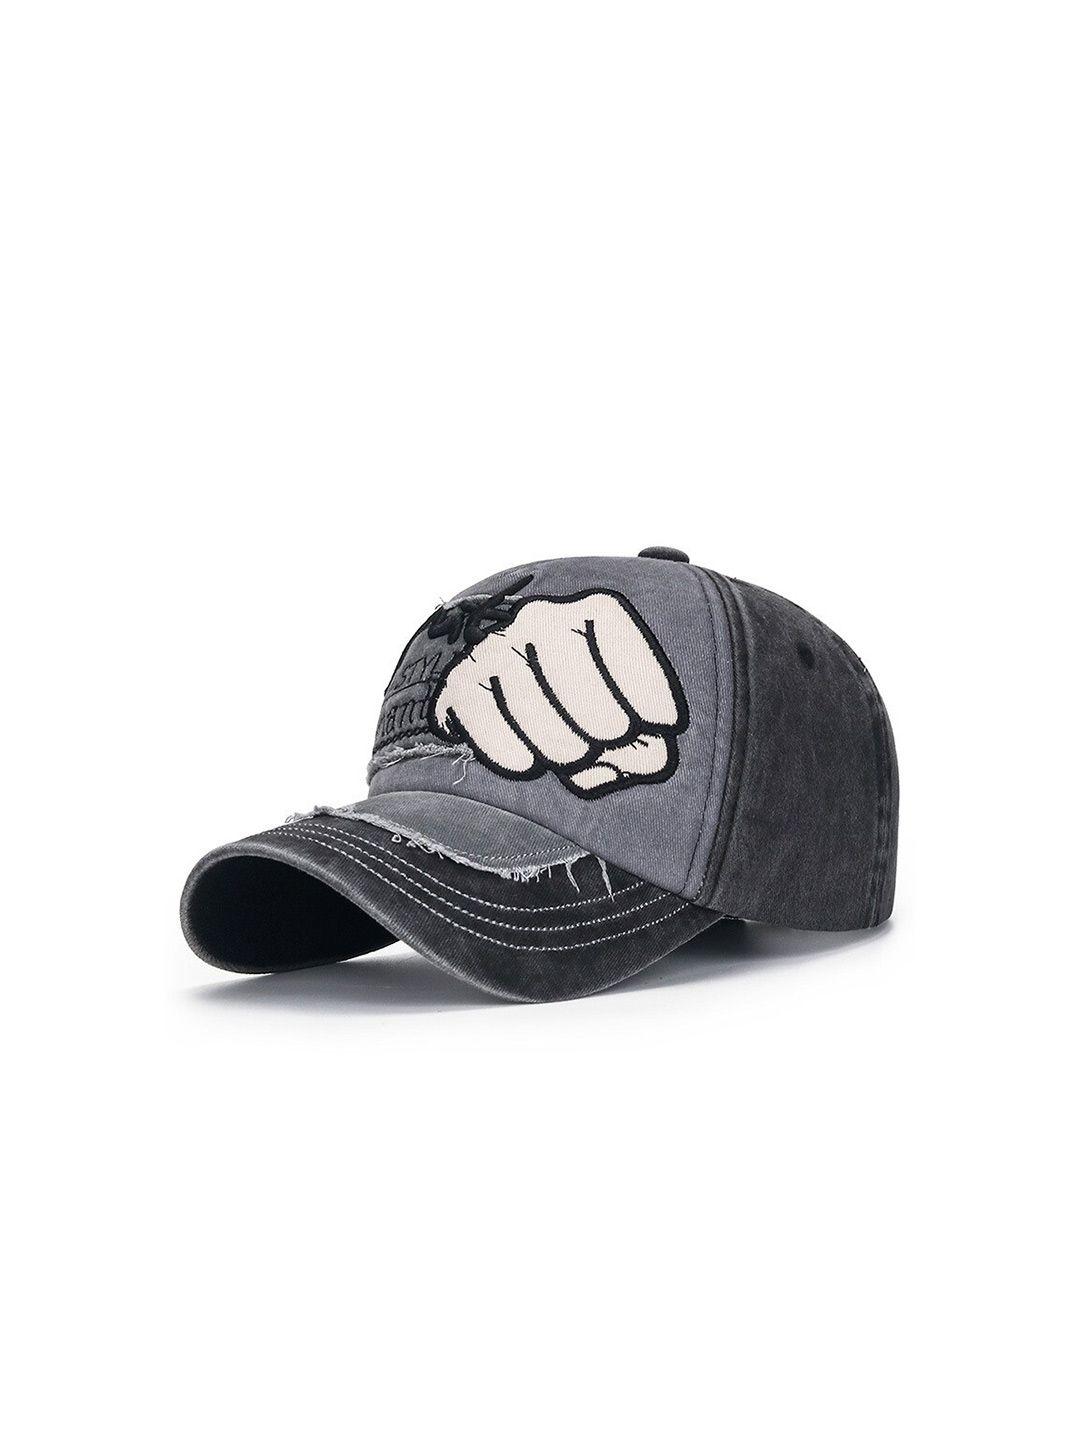 alexvyan men black & grey embroidered baseball cap